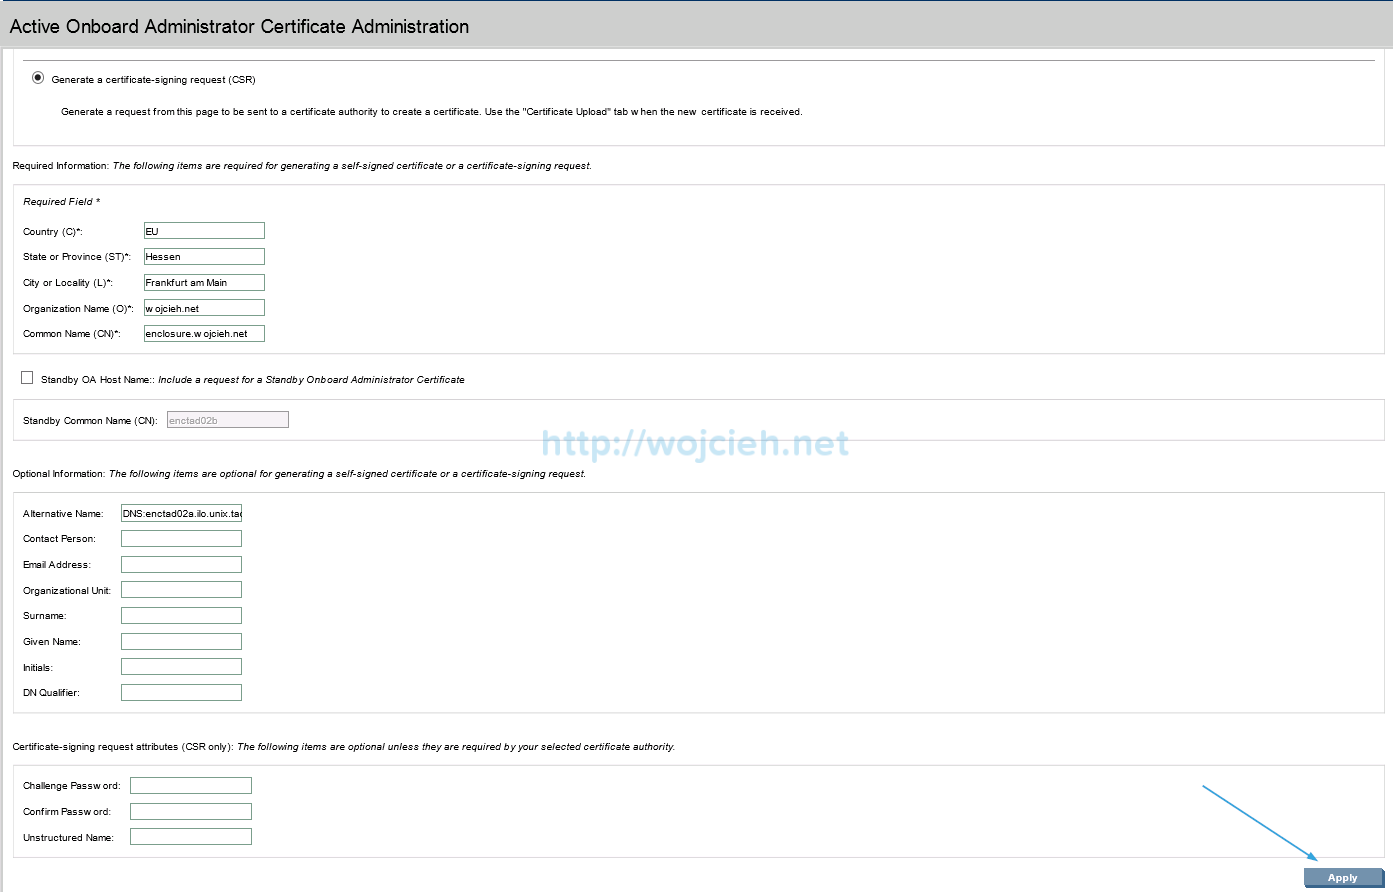 hp proliant onboard administrator set ssl certificate